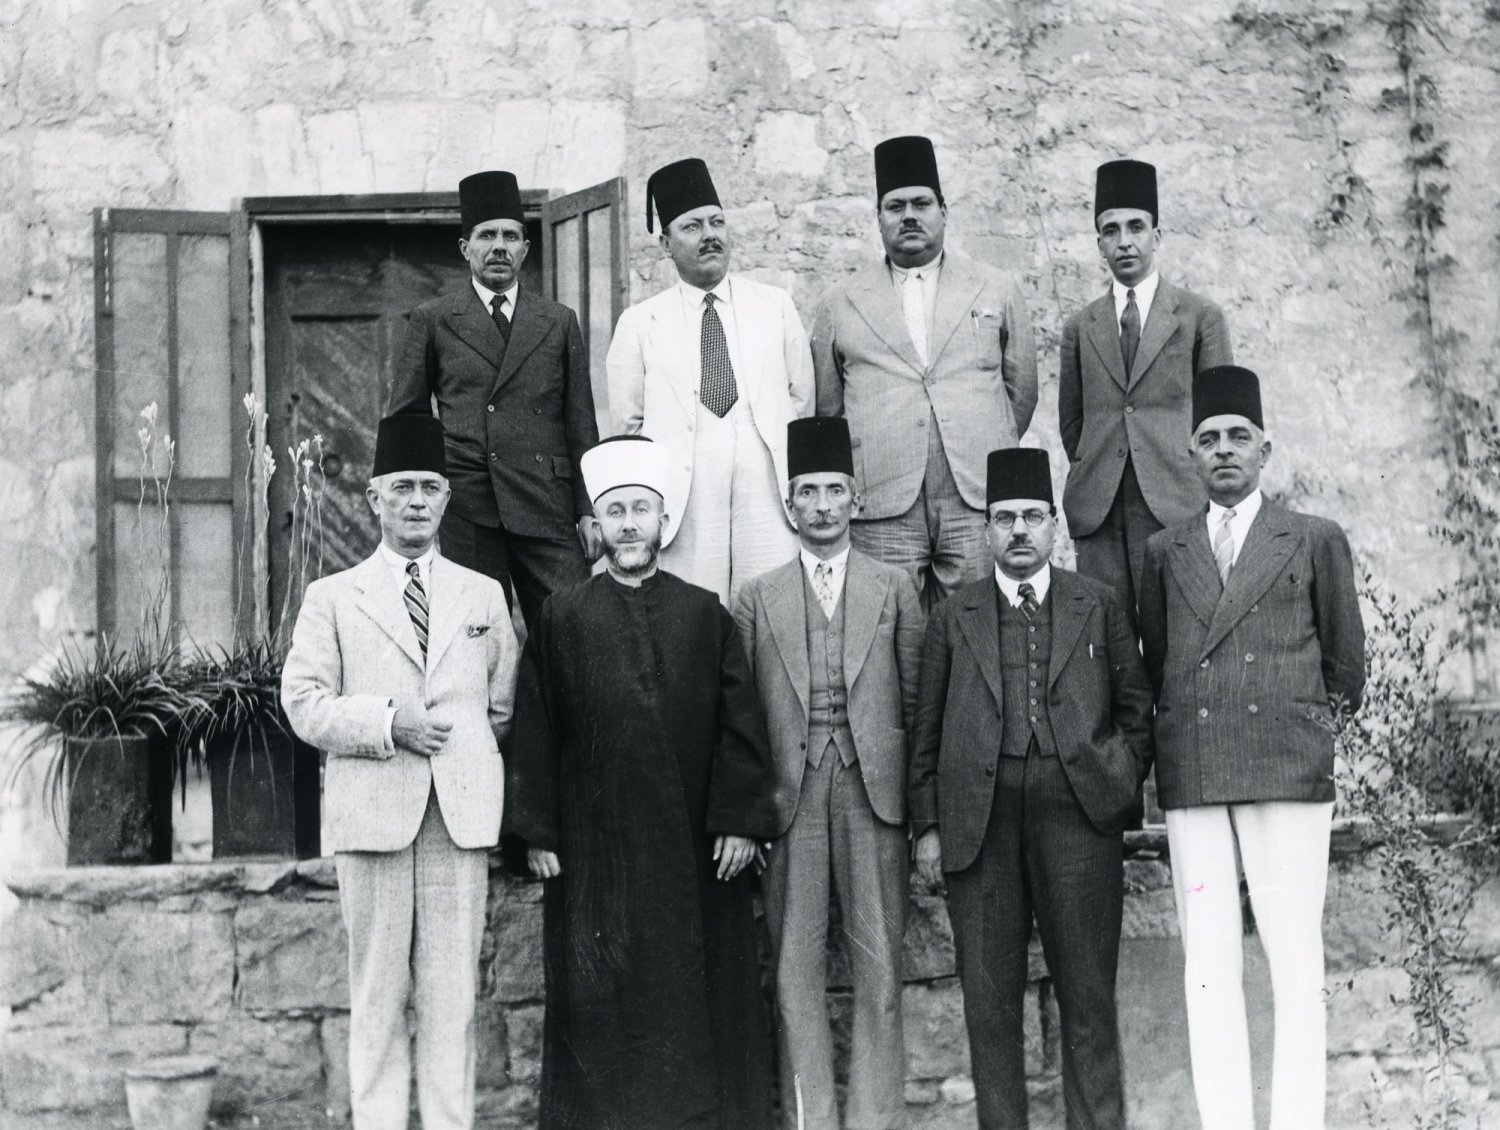 Members of the Arab Higher Committee, April 25, 1936